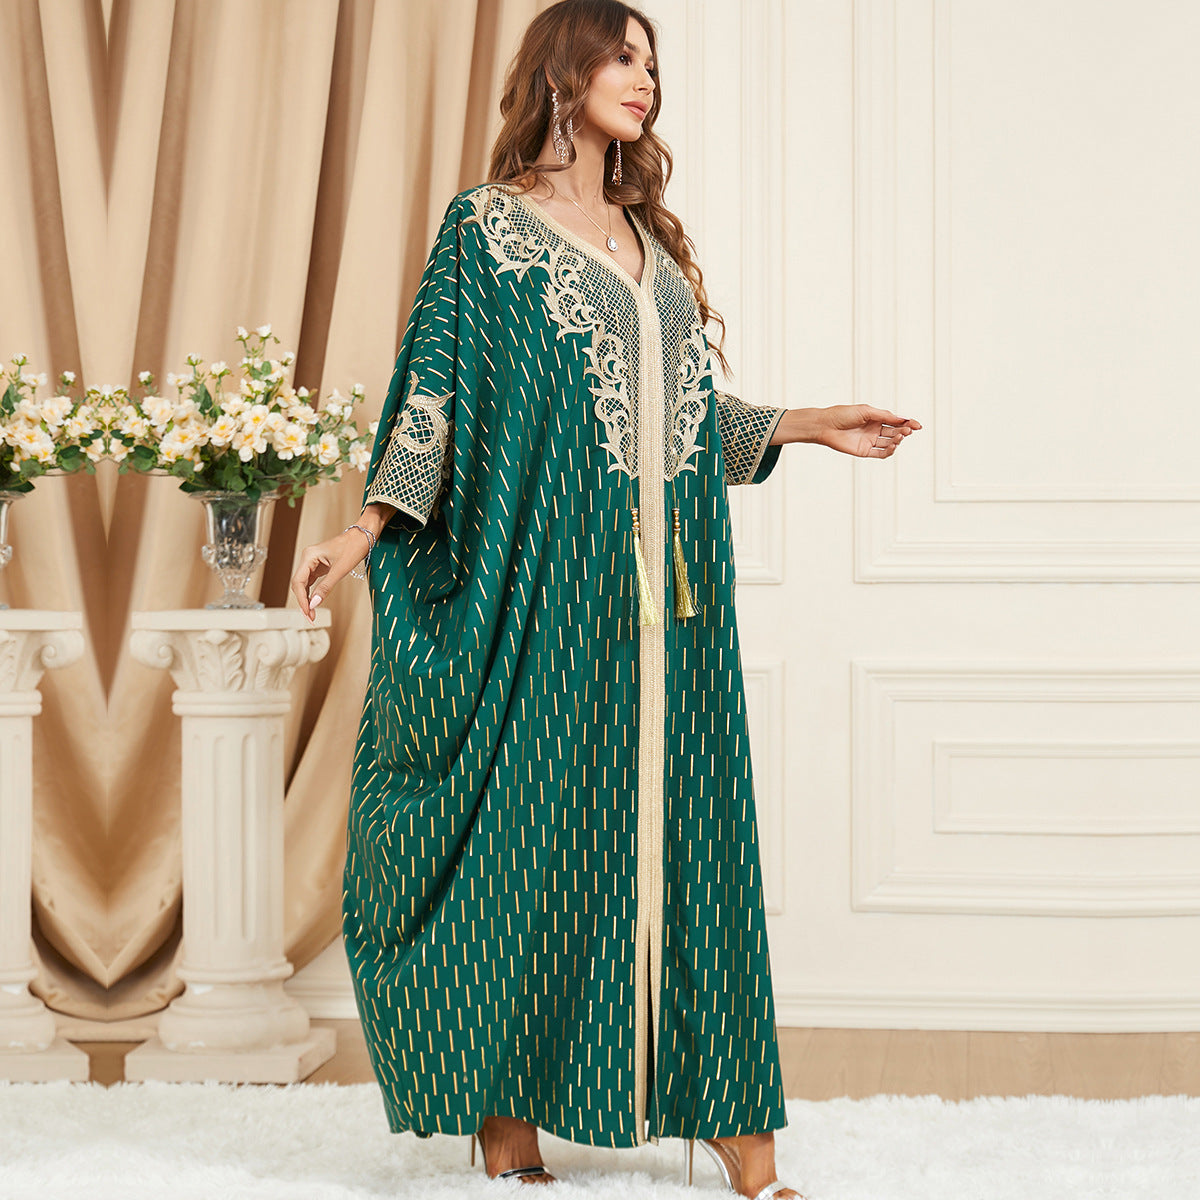 Muslim Green Stamped batwing Sleeve Patchwork Fringe Dress